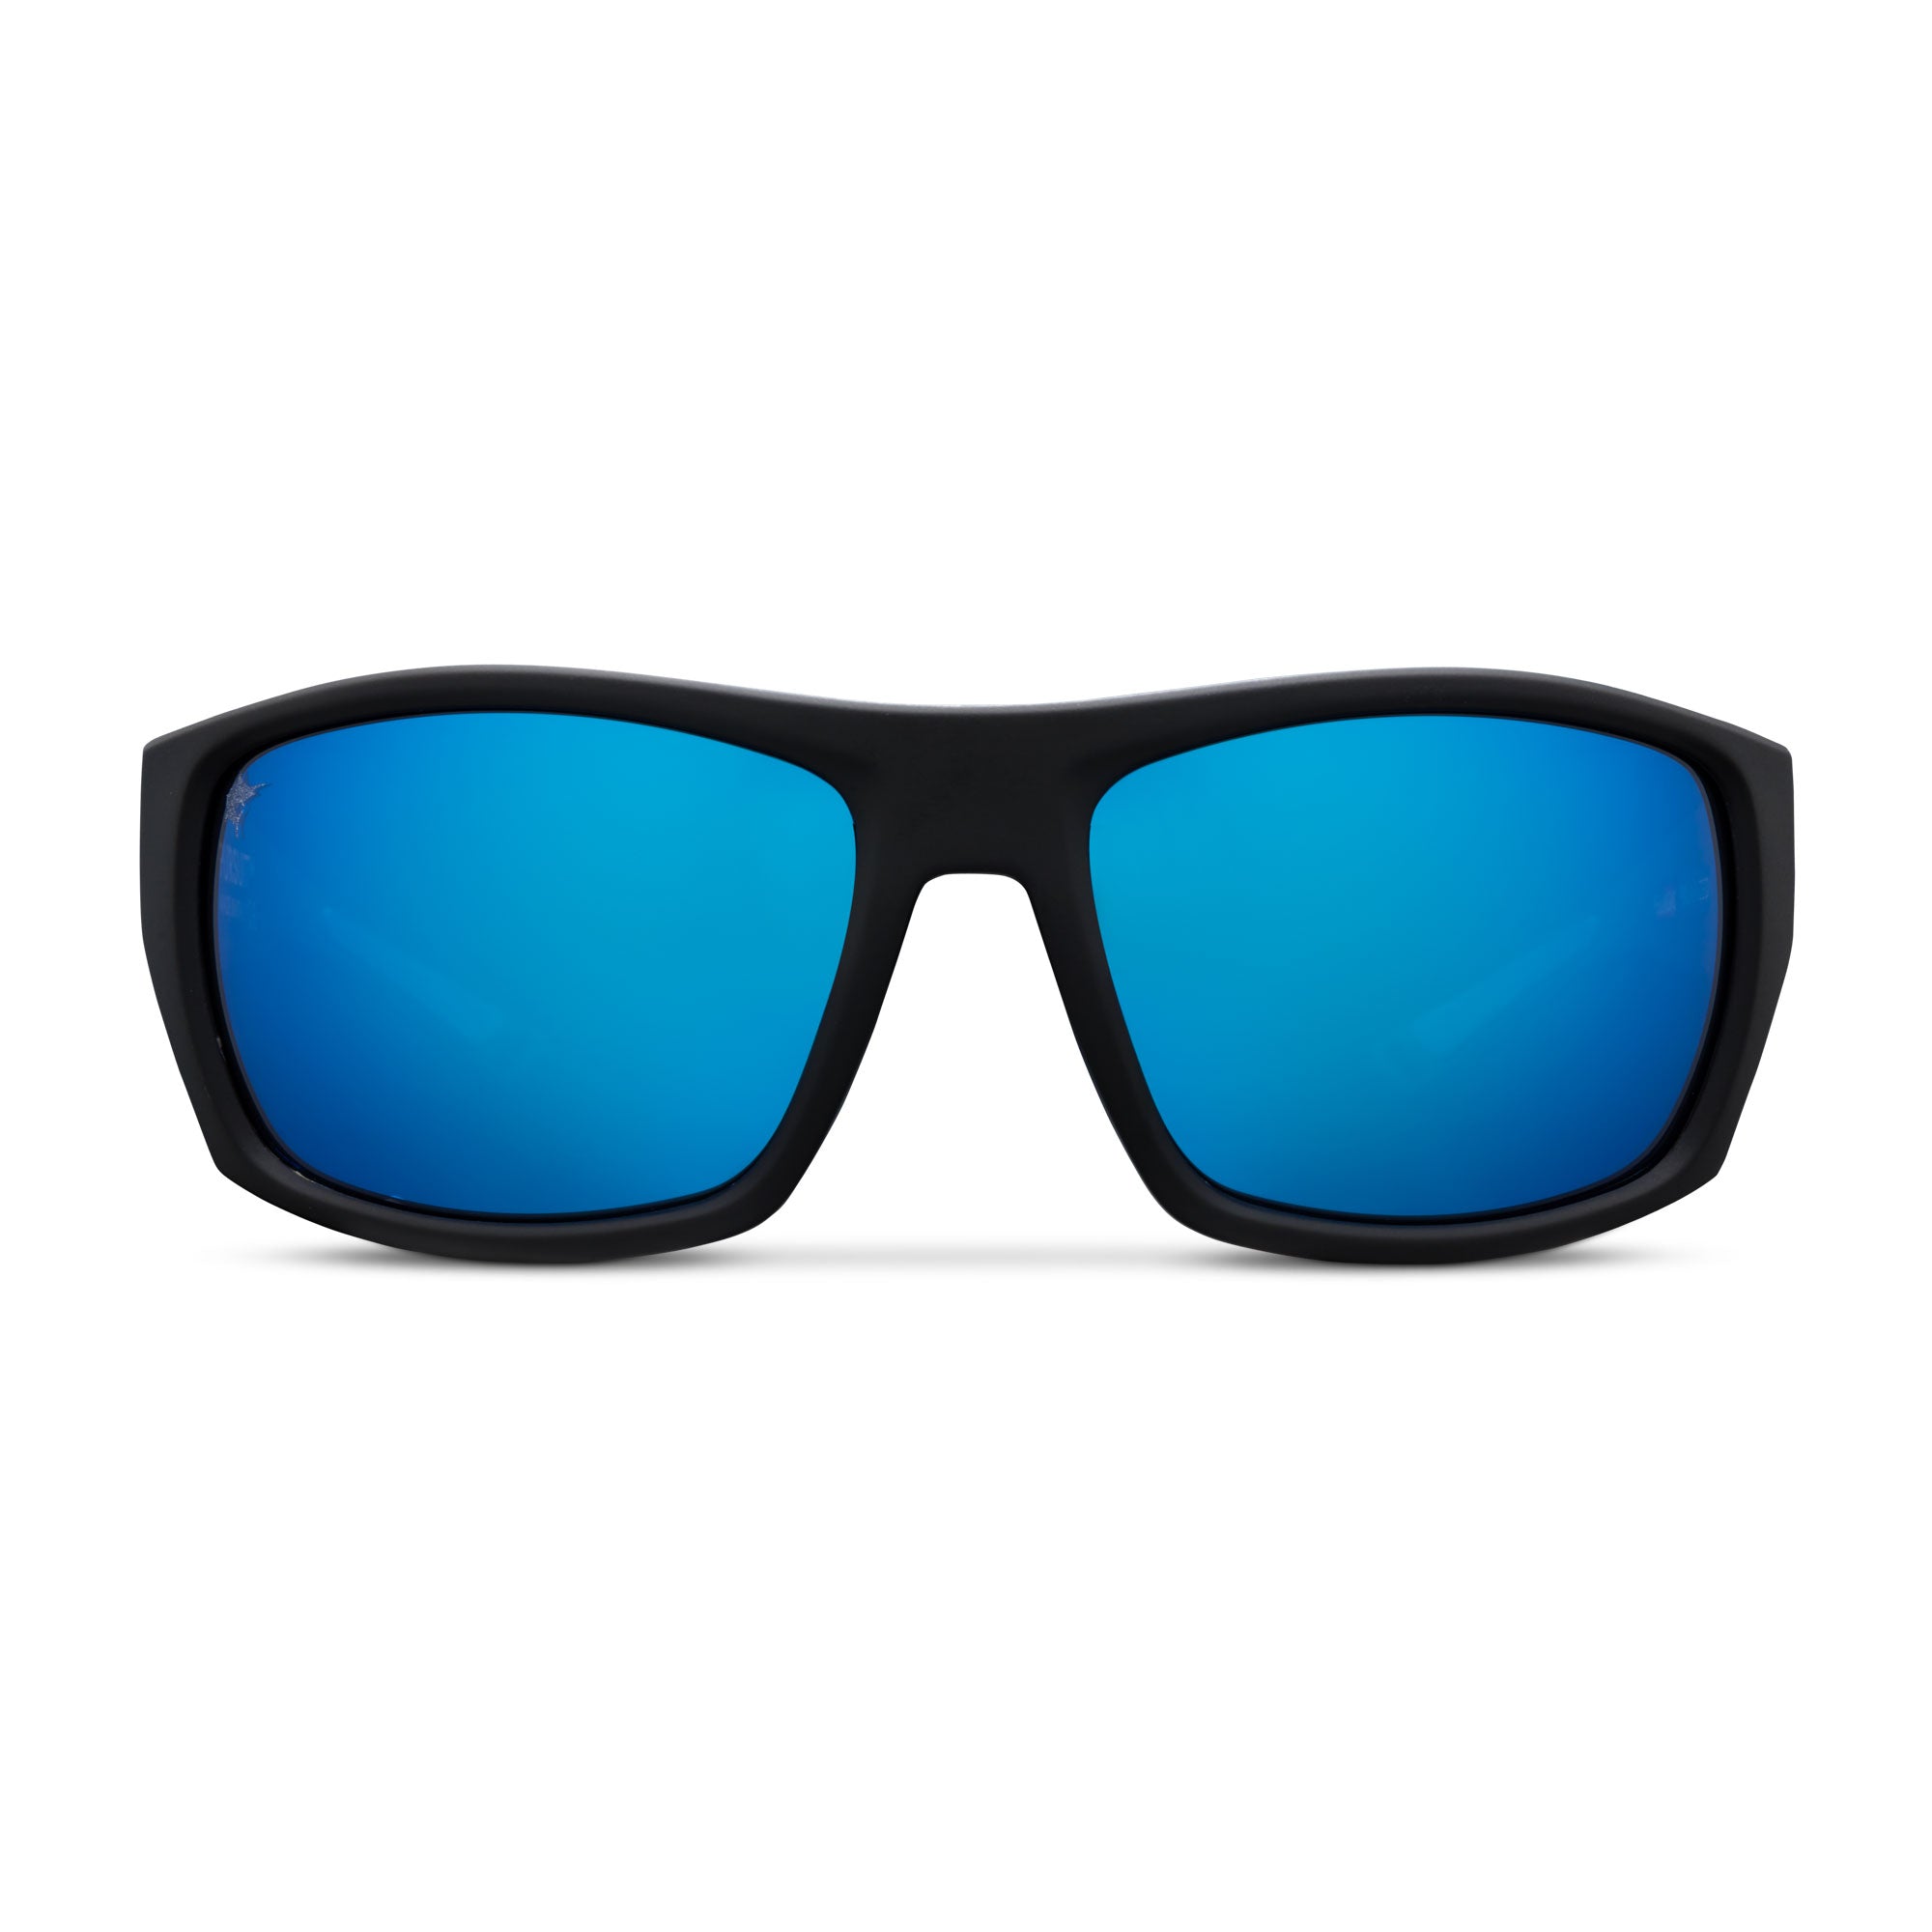 Prowler Polarized Fishg Glasses - CAMO / Gray / Blue Mirror